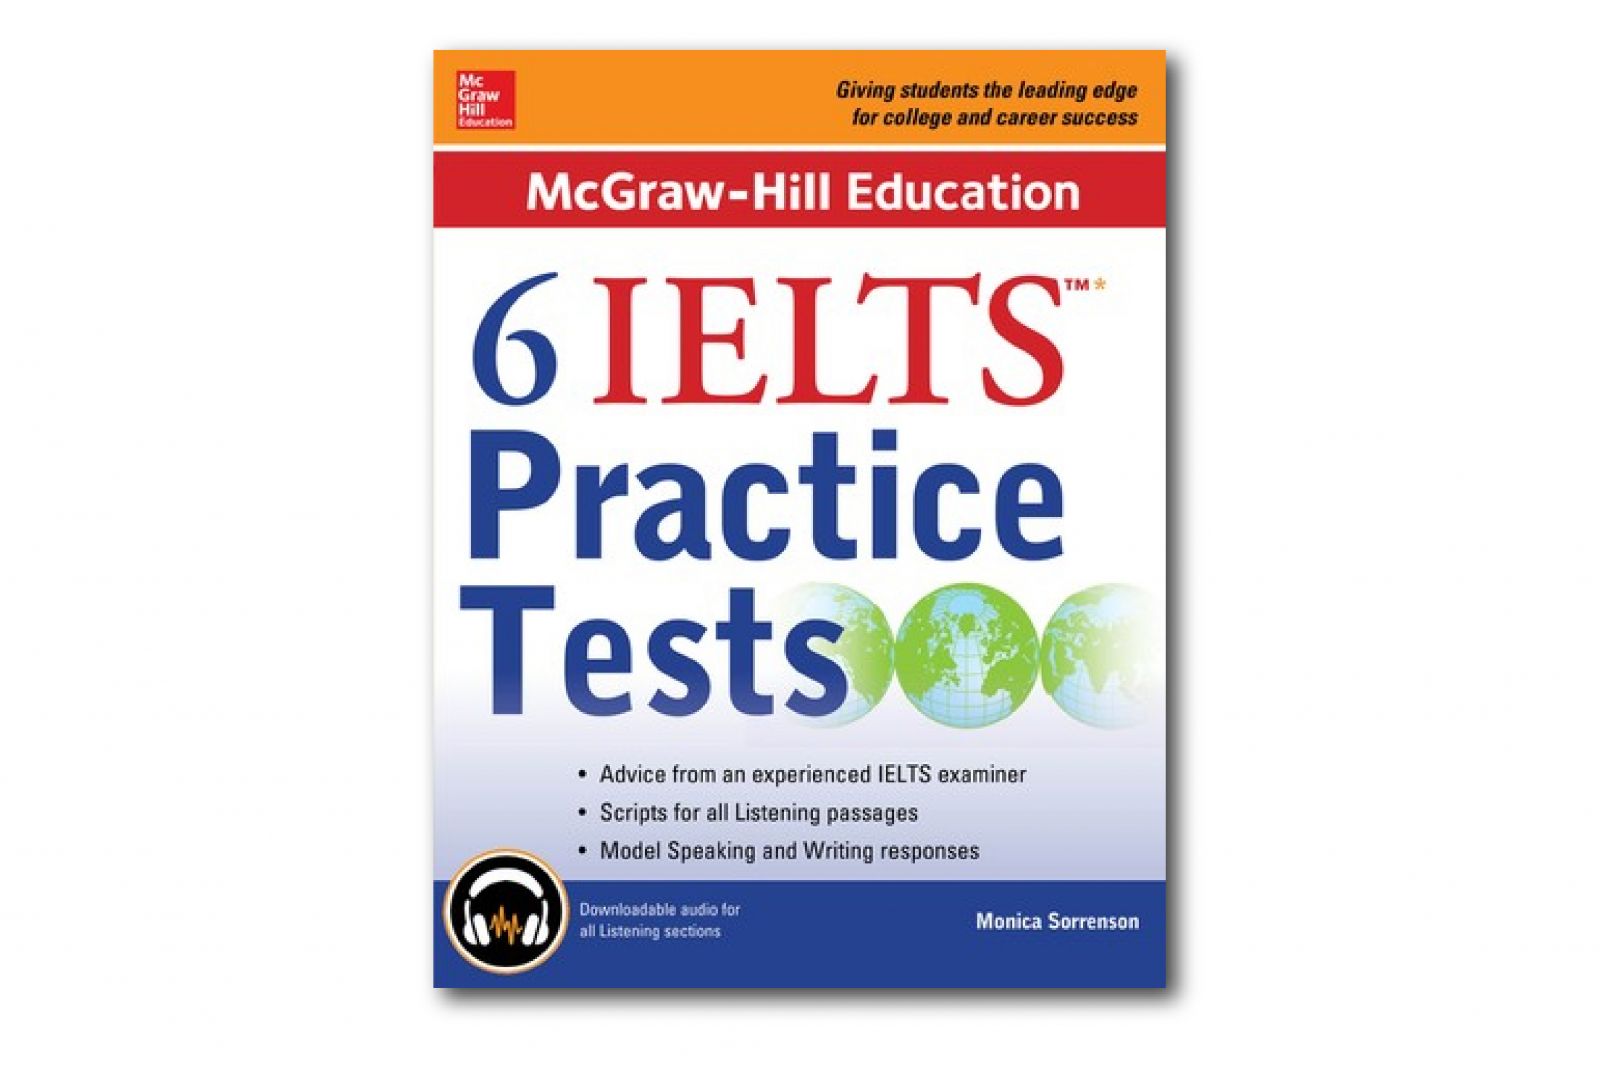 McGraw - Hill Education 6